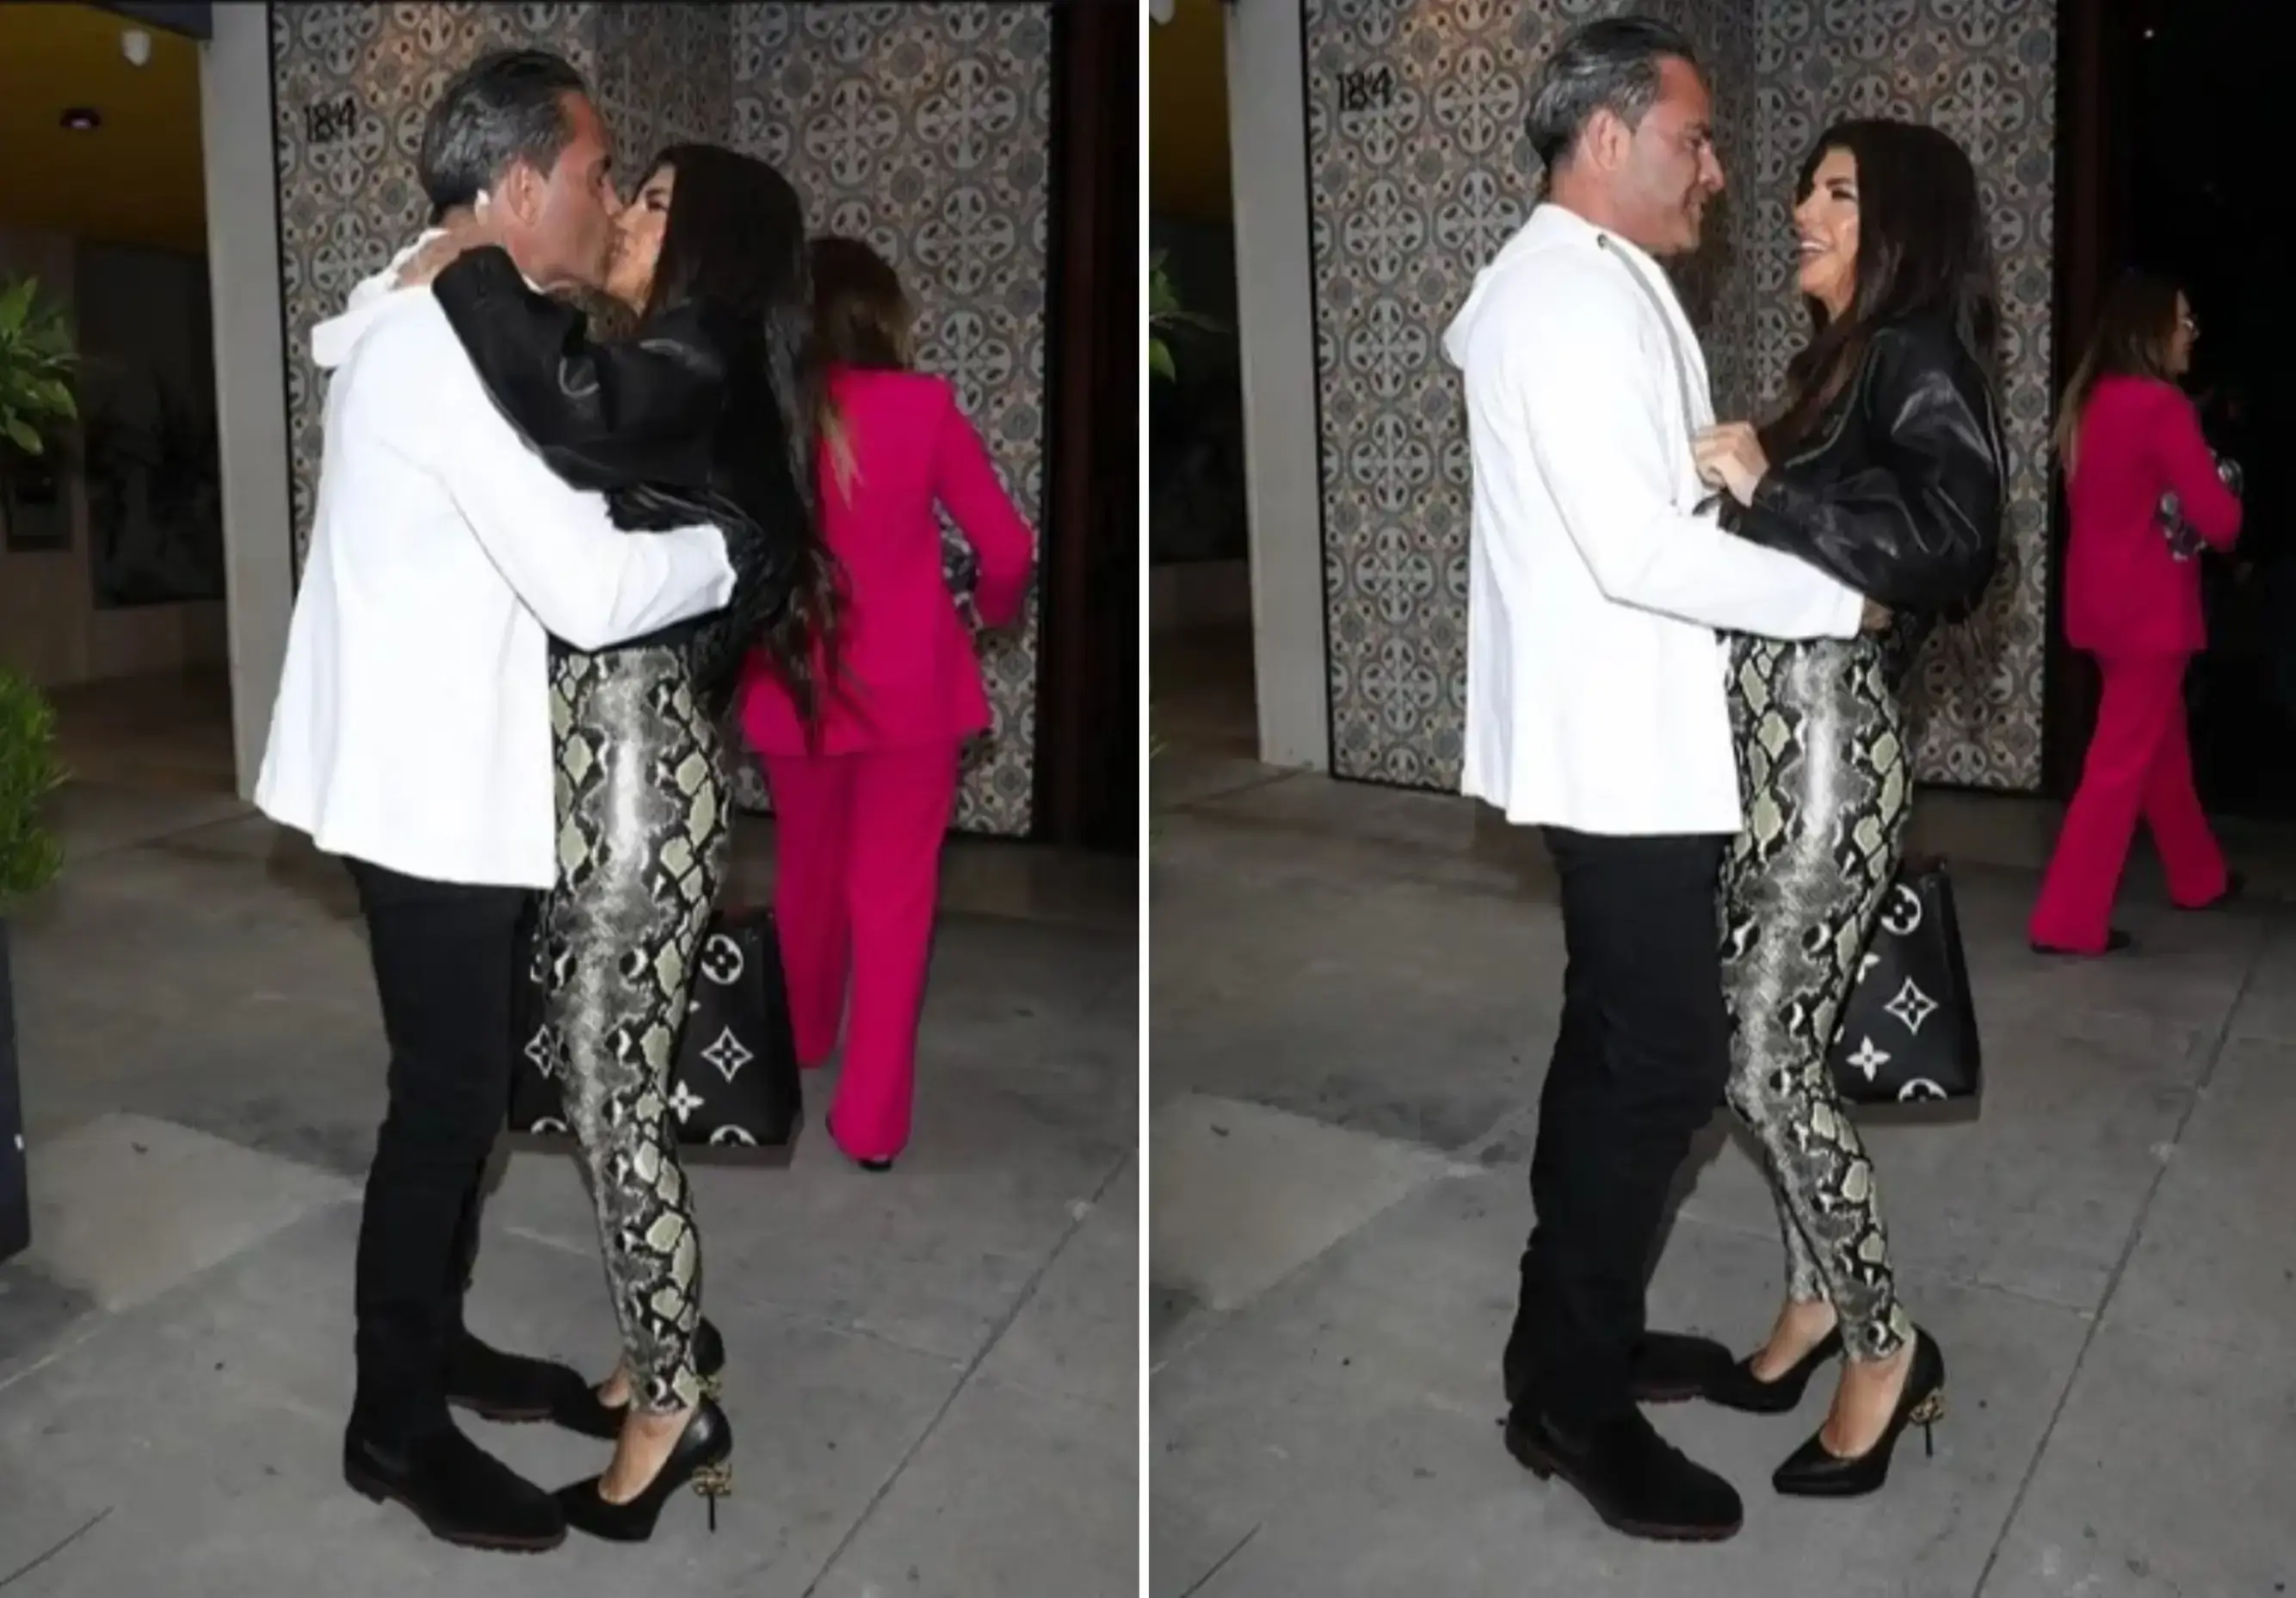 Teresa Giudice and Luis Ruelas Kissing amid rumors of Marital Problems